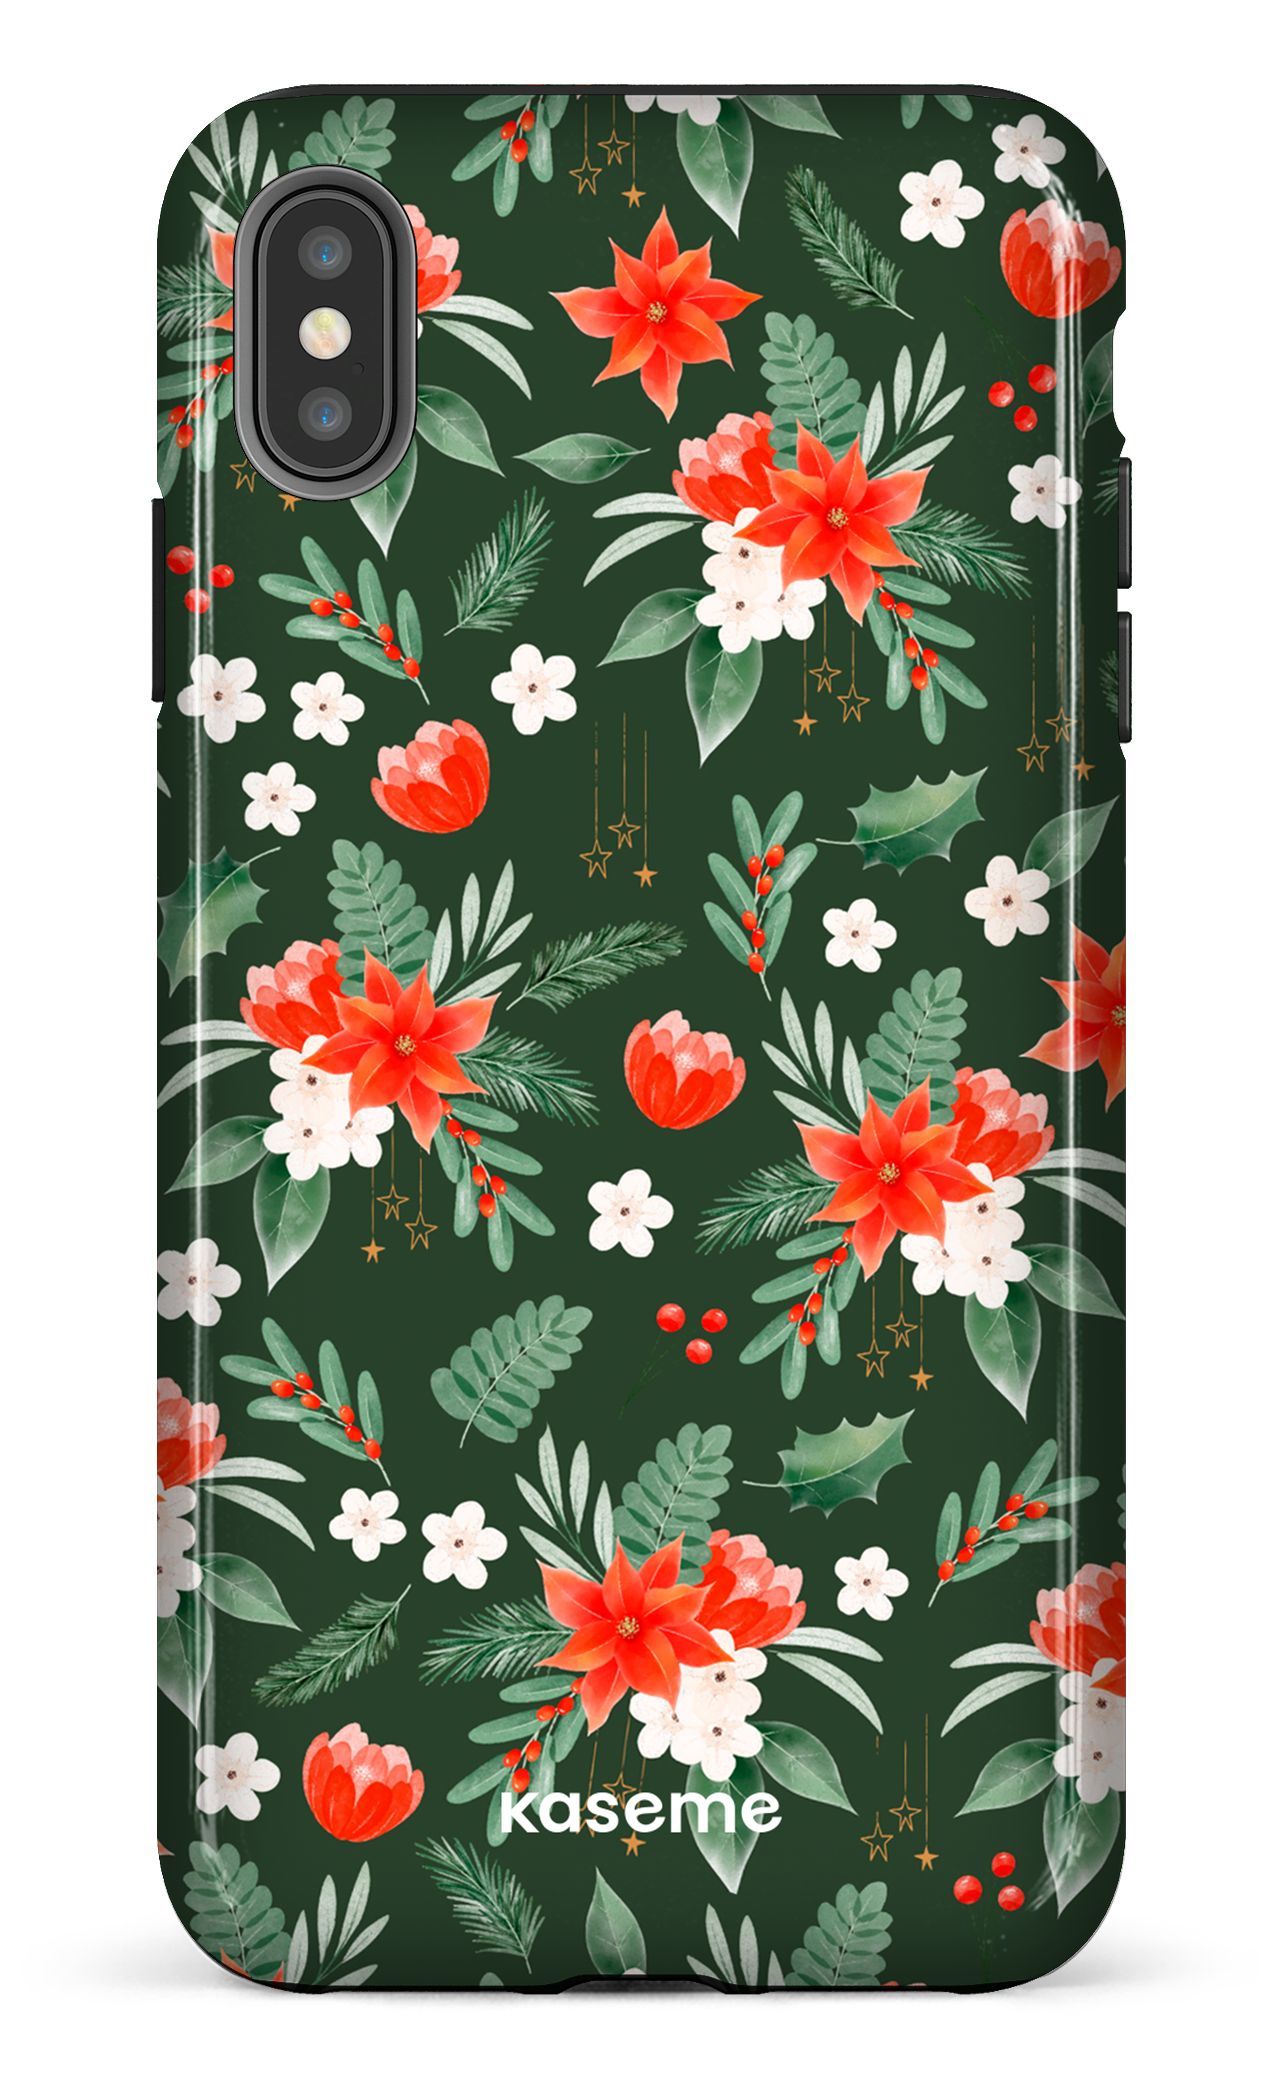 Poinsettia - iPhone XS Max